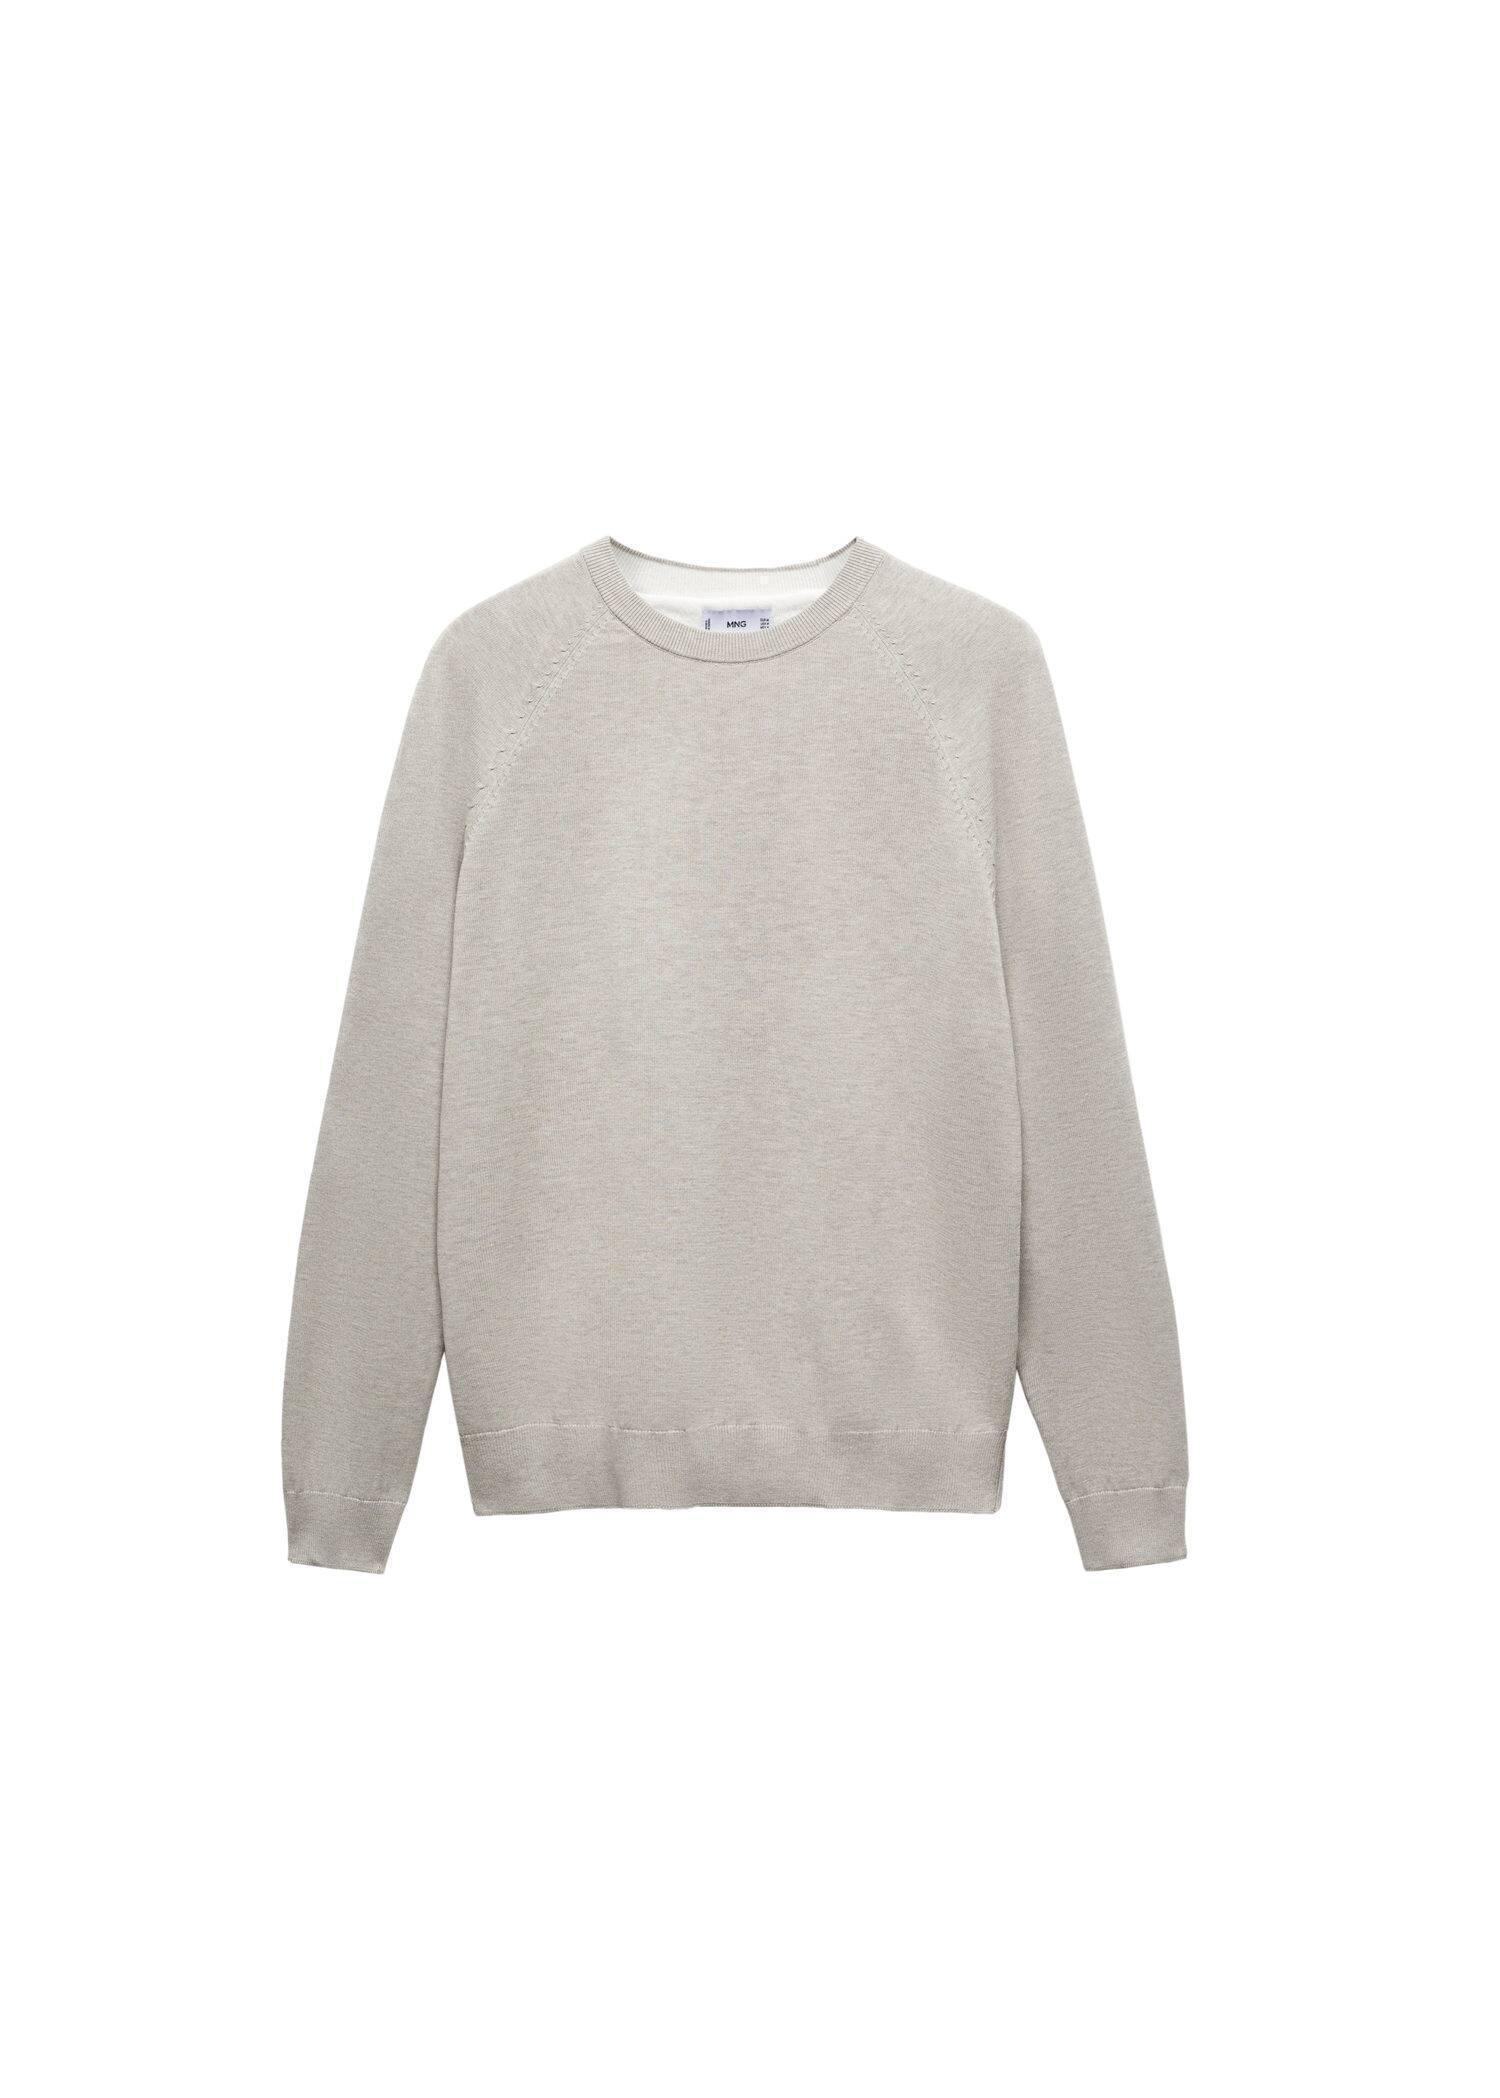 Mango - Brown Lt-Pastel Fine-Knit Cotton Sweater